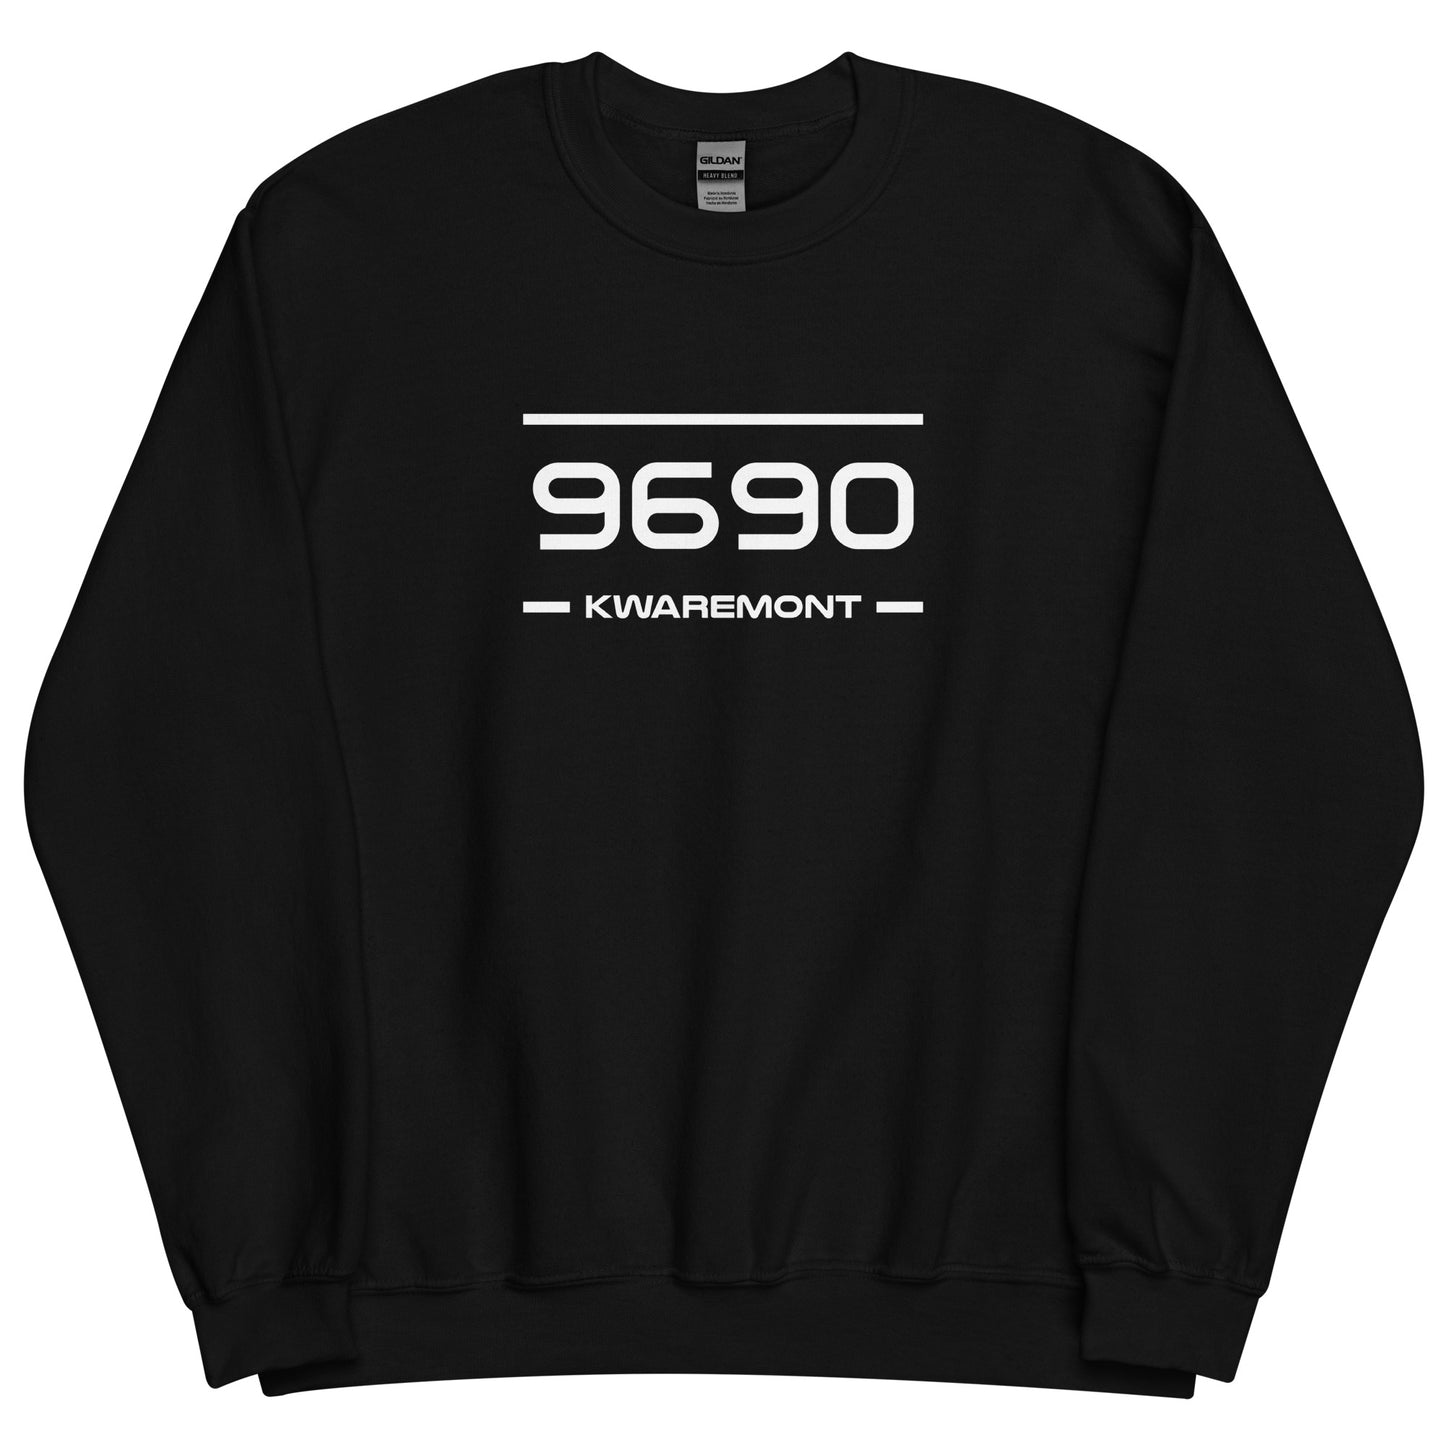 Sweater - 9690 - Kwaremont (M/V)